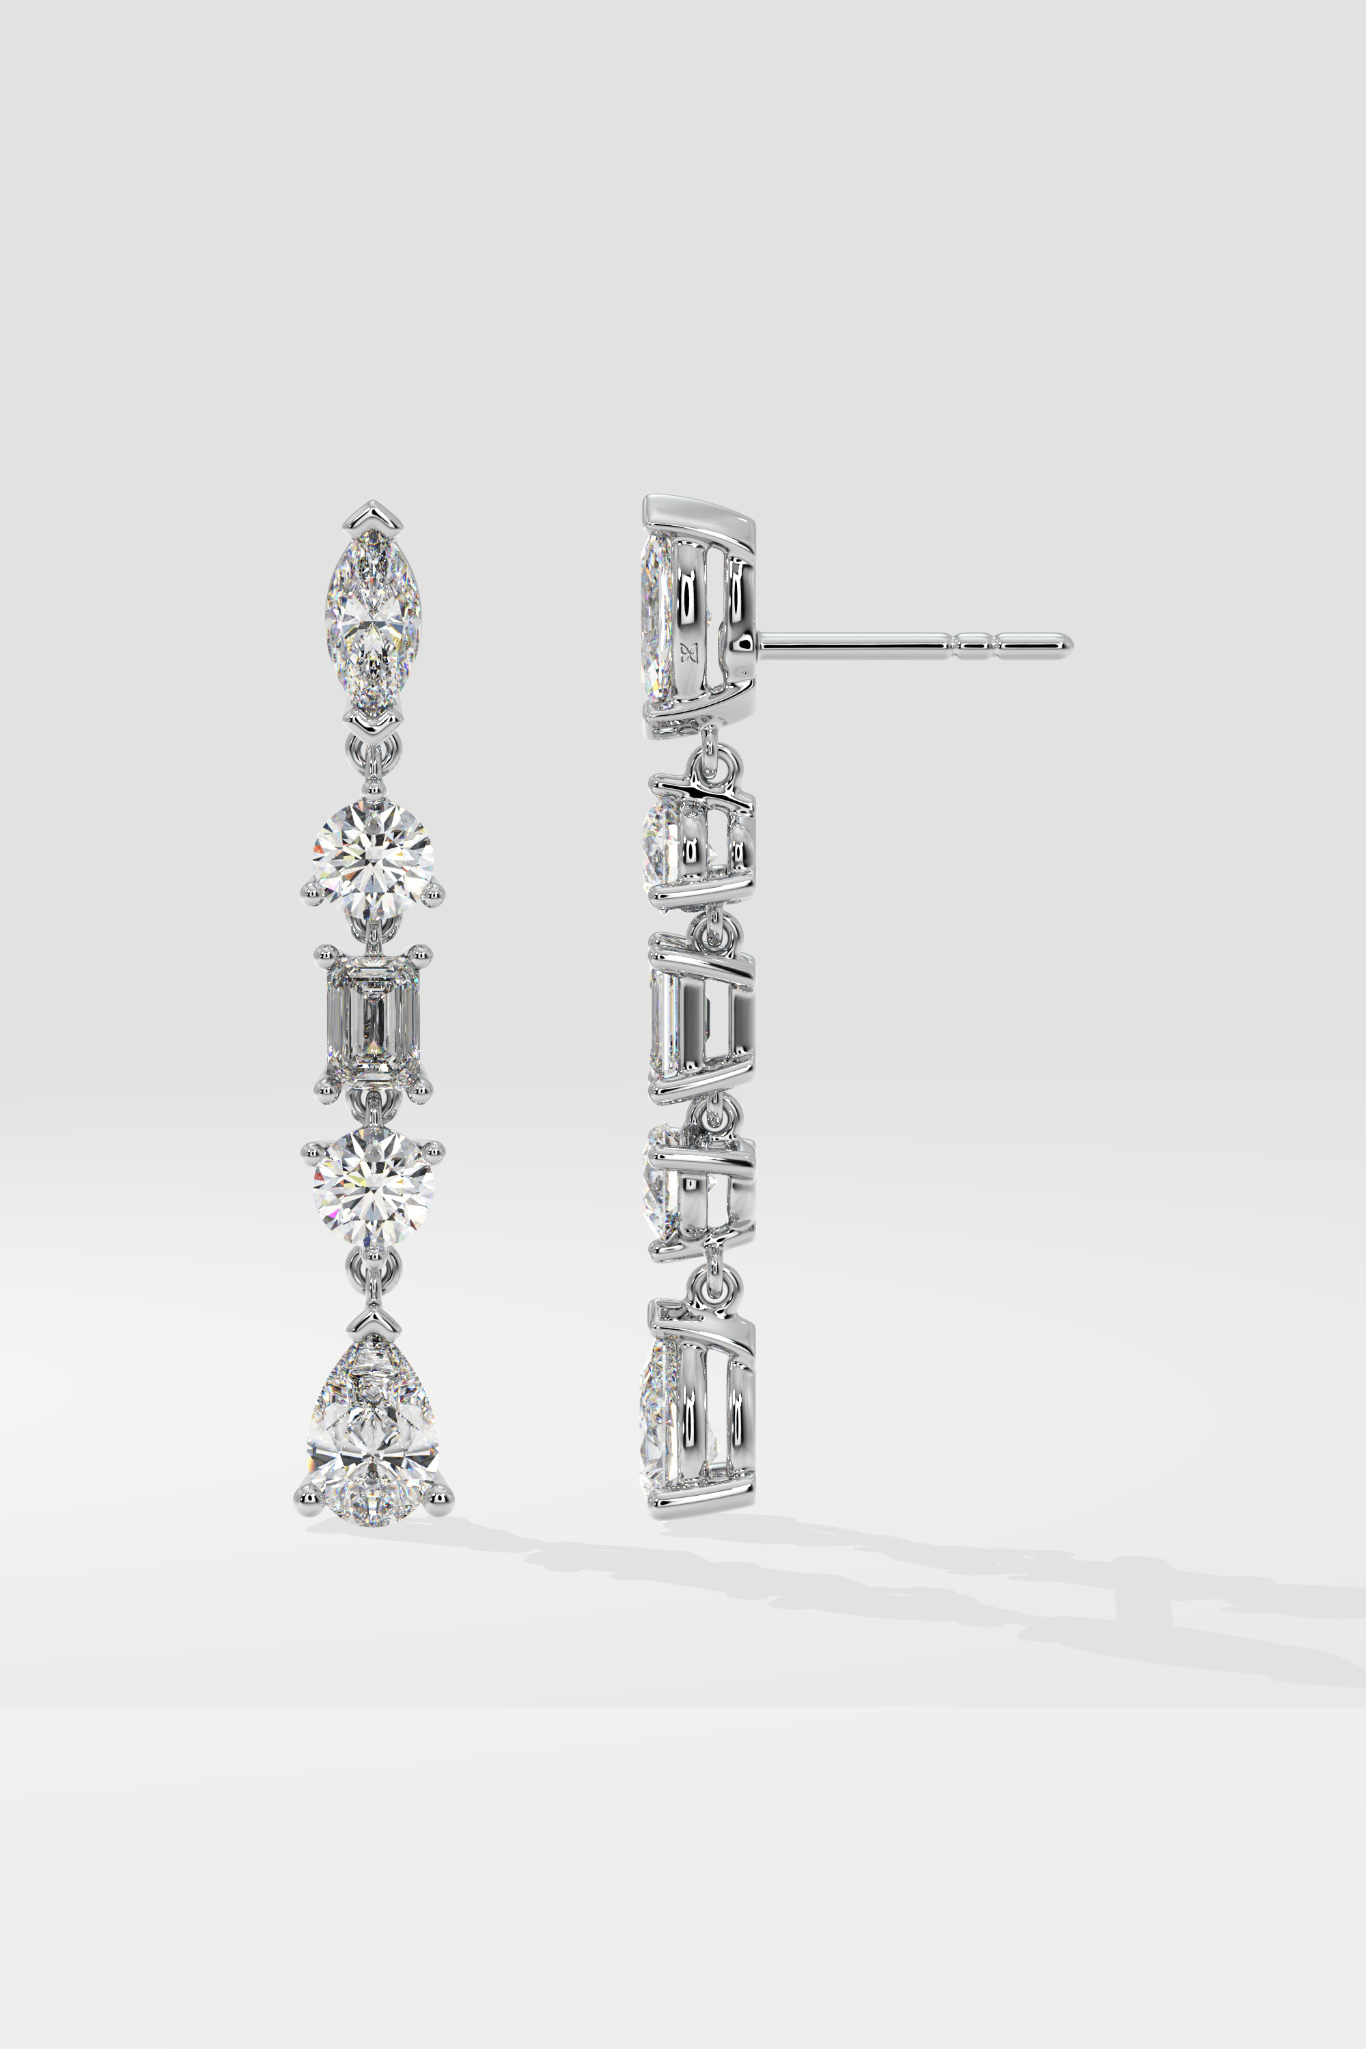 Genuine Diamond Dangle Earrings - Dainty Flower Cluster Drops - Rose Gold  Fine Jewelry Gift for Her